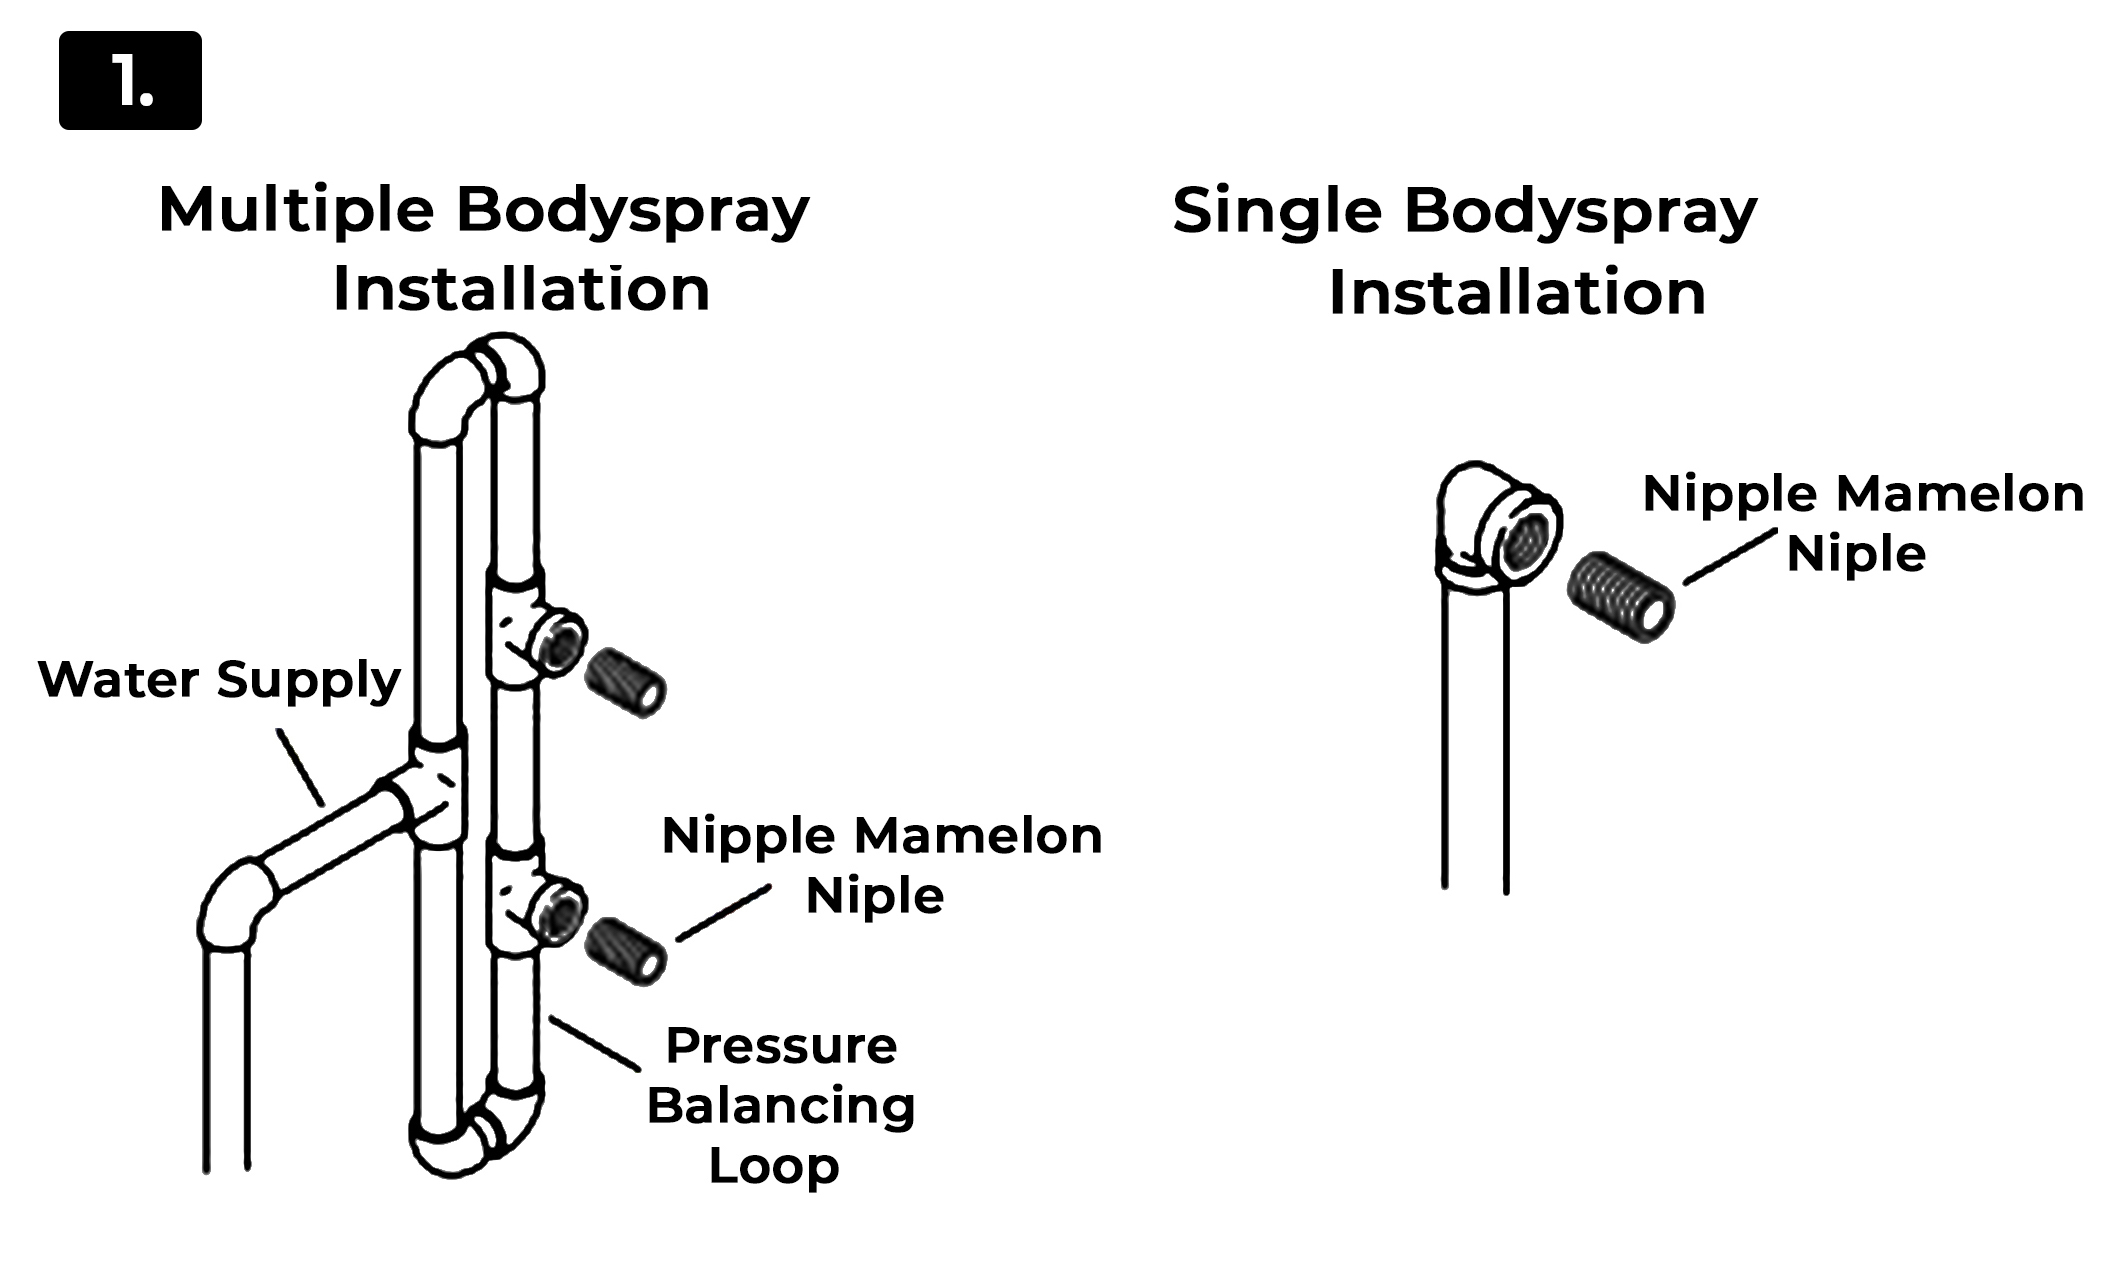 Multiple Bodyspray Installation